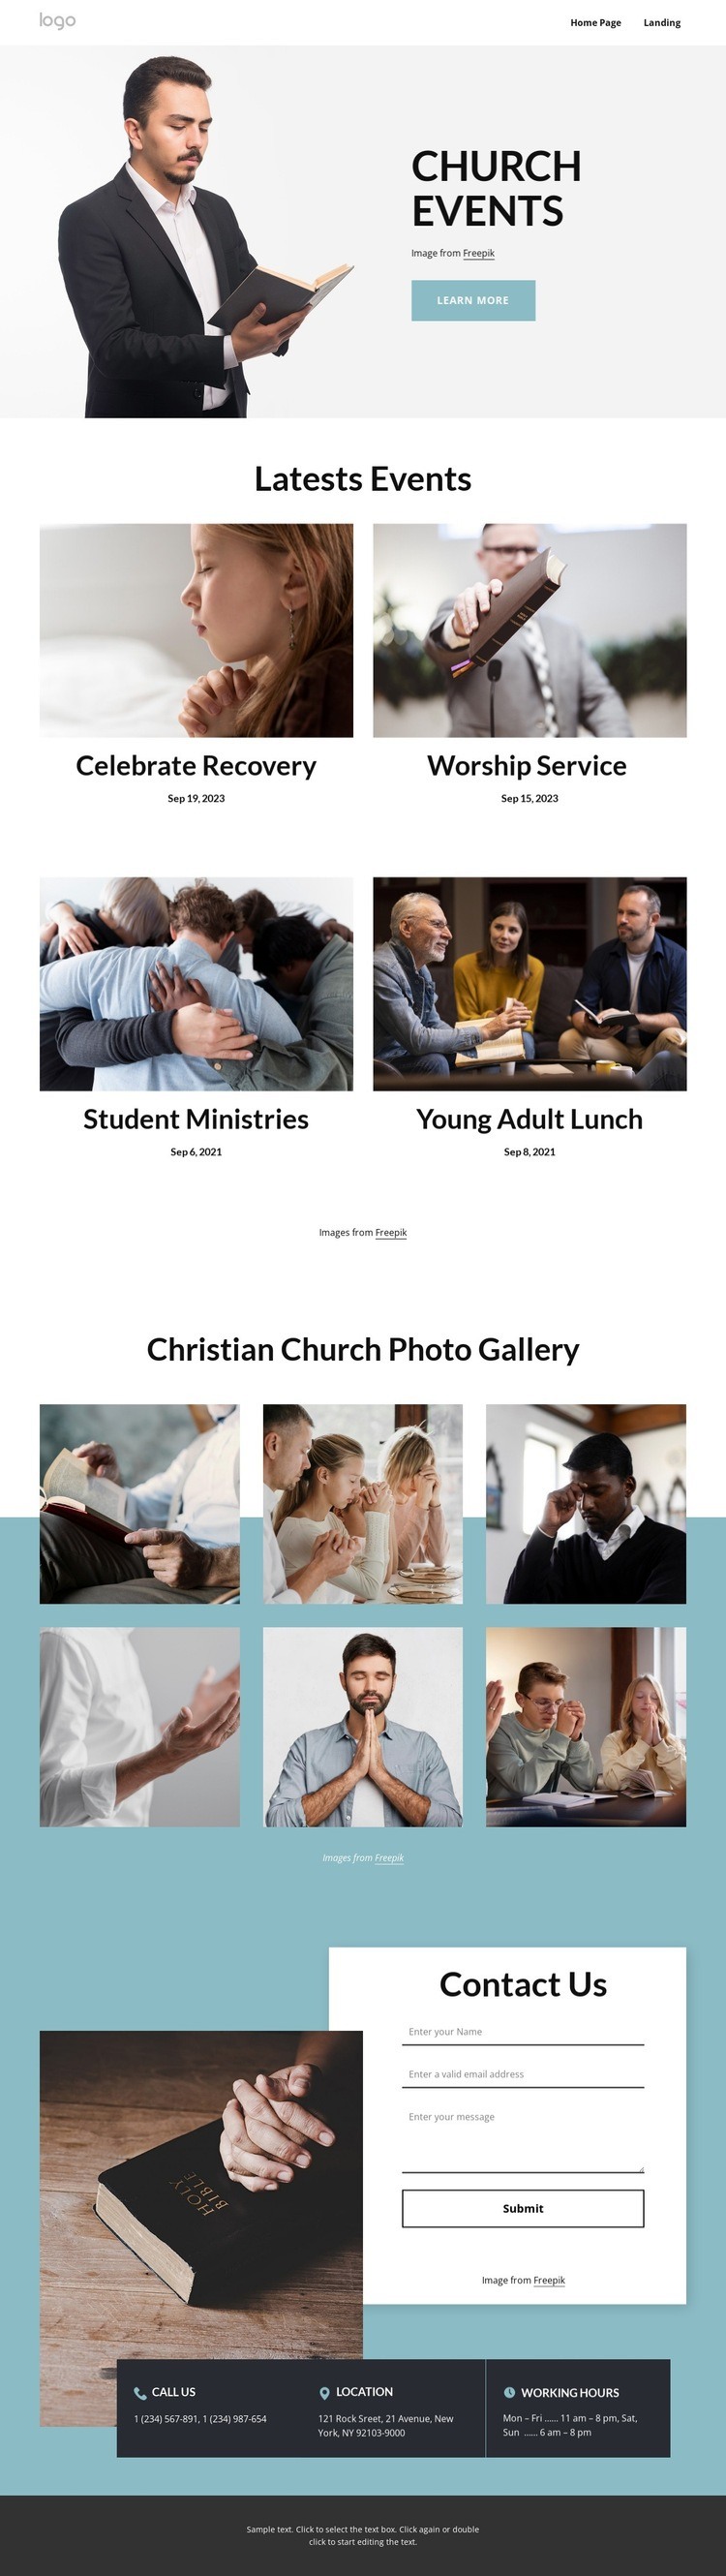 Church events Web Page Design